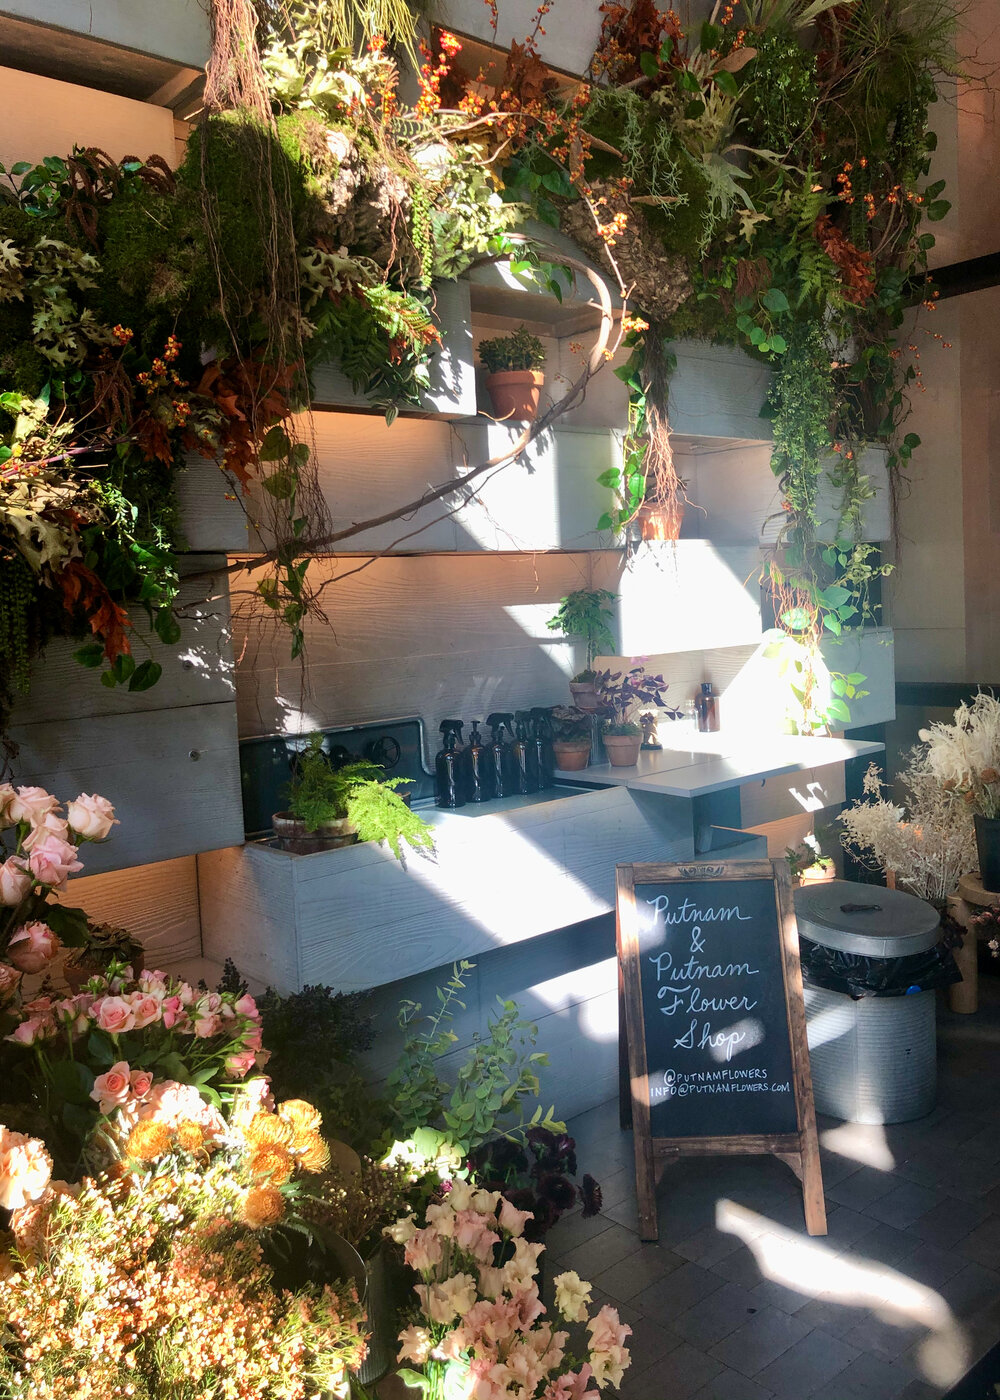 The hotel lobby/flower shop